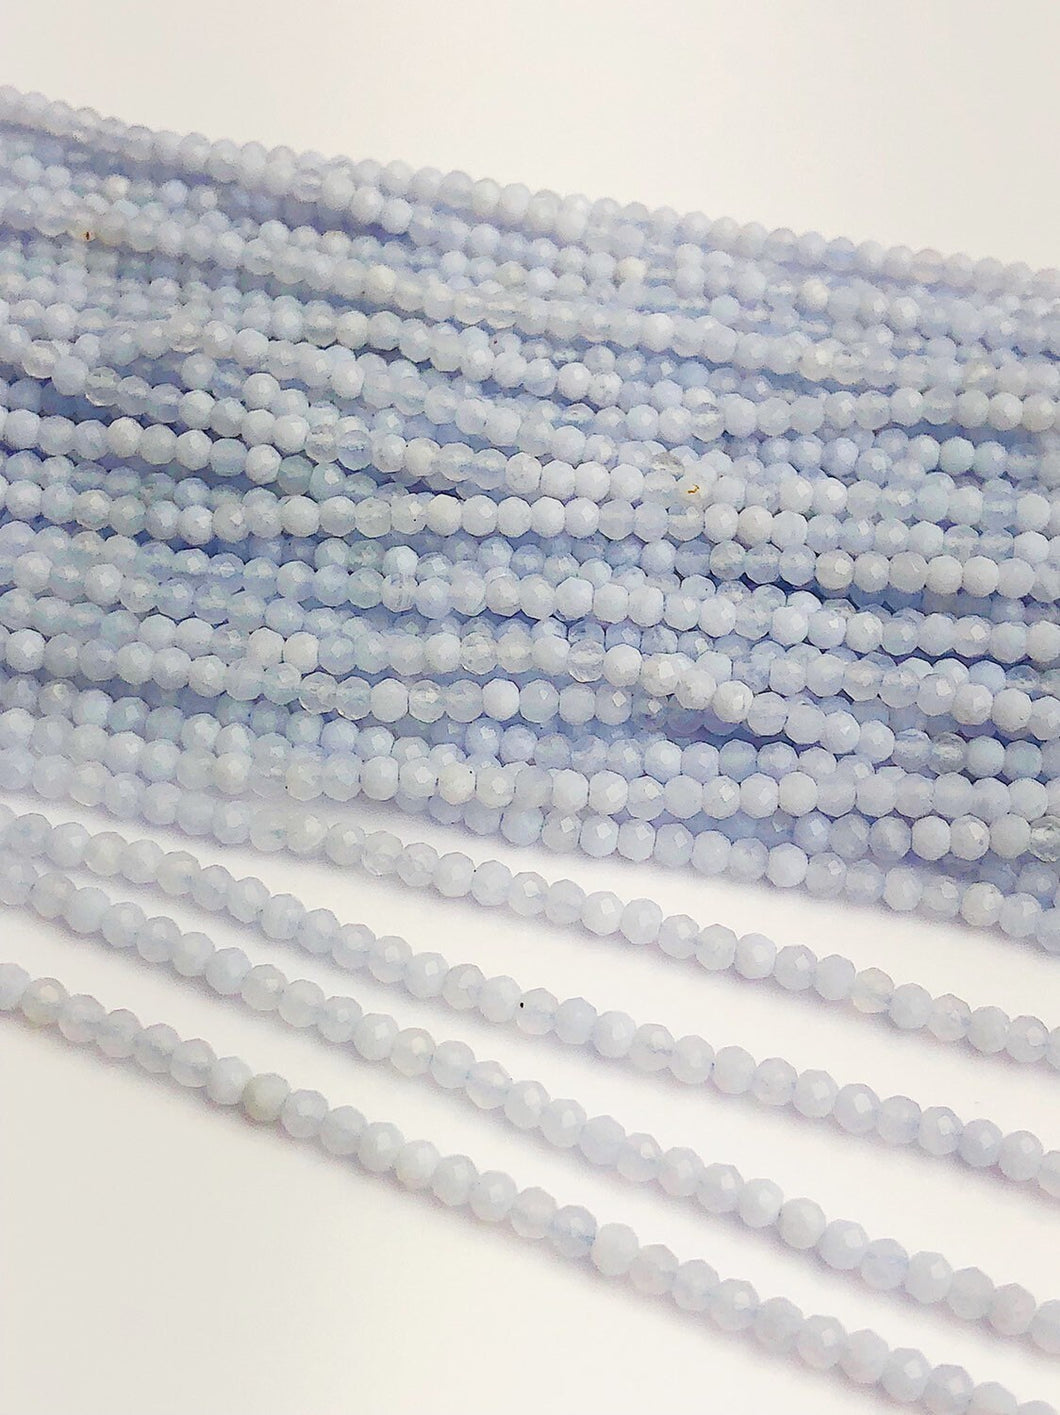 HALF OFF SALE - Blue Calcedony Gemstone Beads, Full Strand, Semi Precious Gemstone, 13